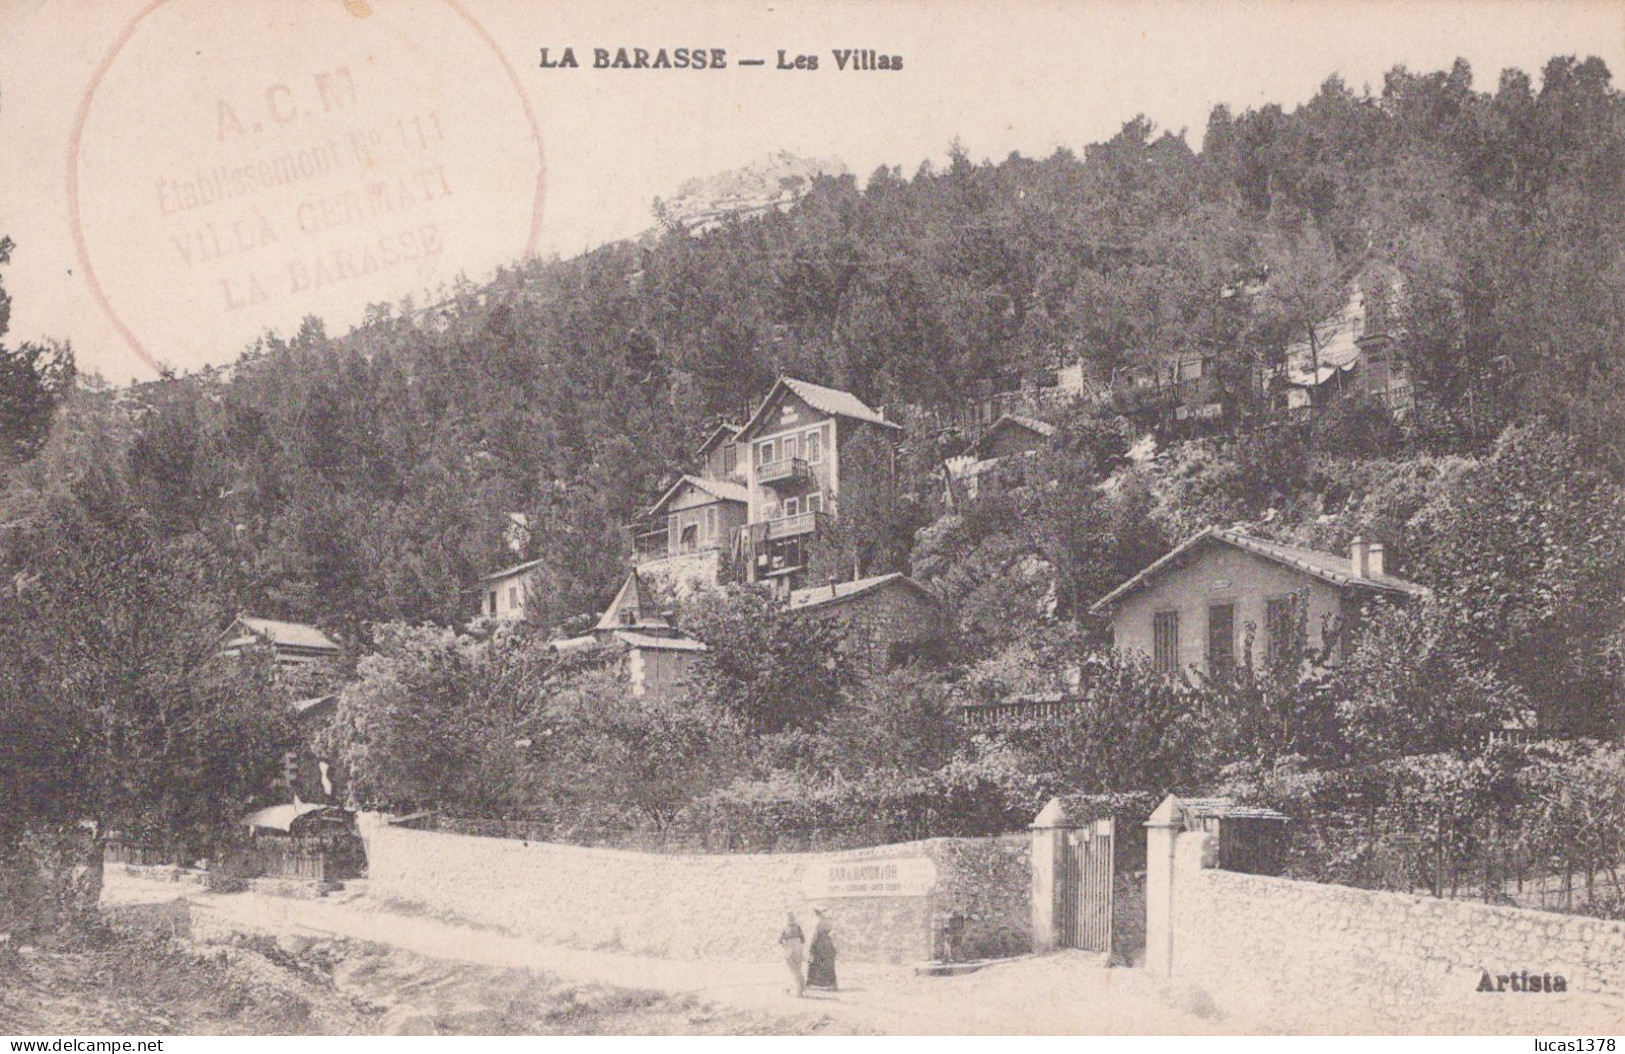 13 / MARSEILLE / LA BARASSE / LES VILLAS / VILLA GERMATI - Saint Marcel, La Barasse, Saintt Menet